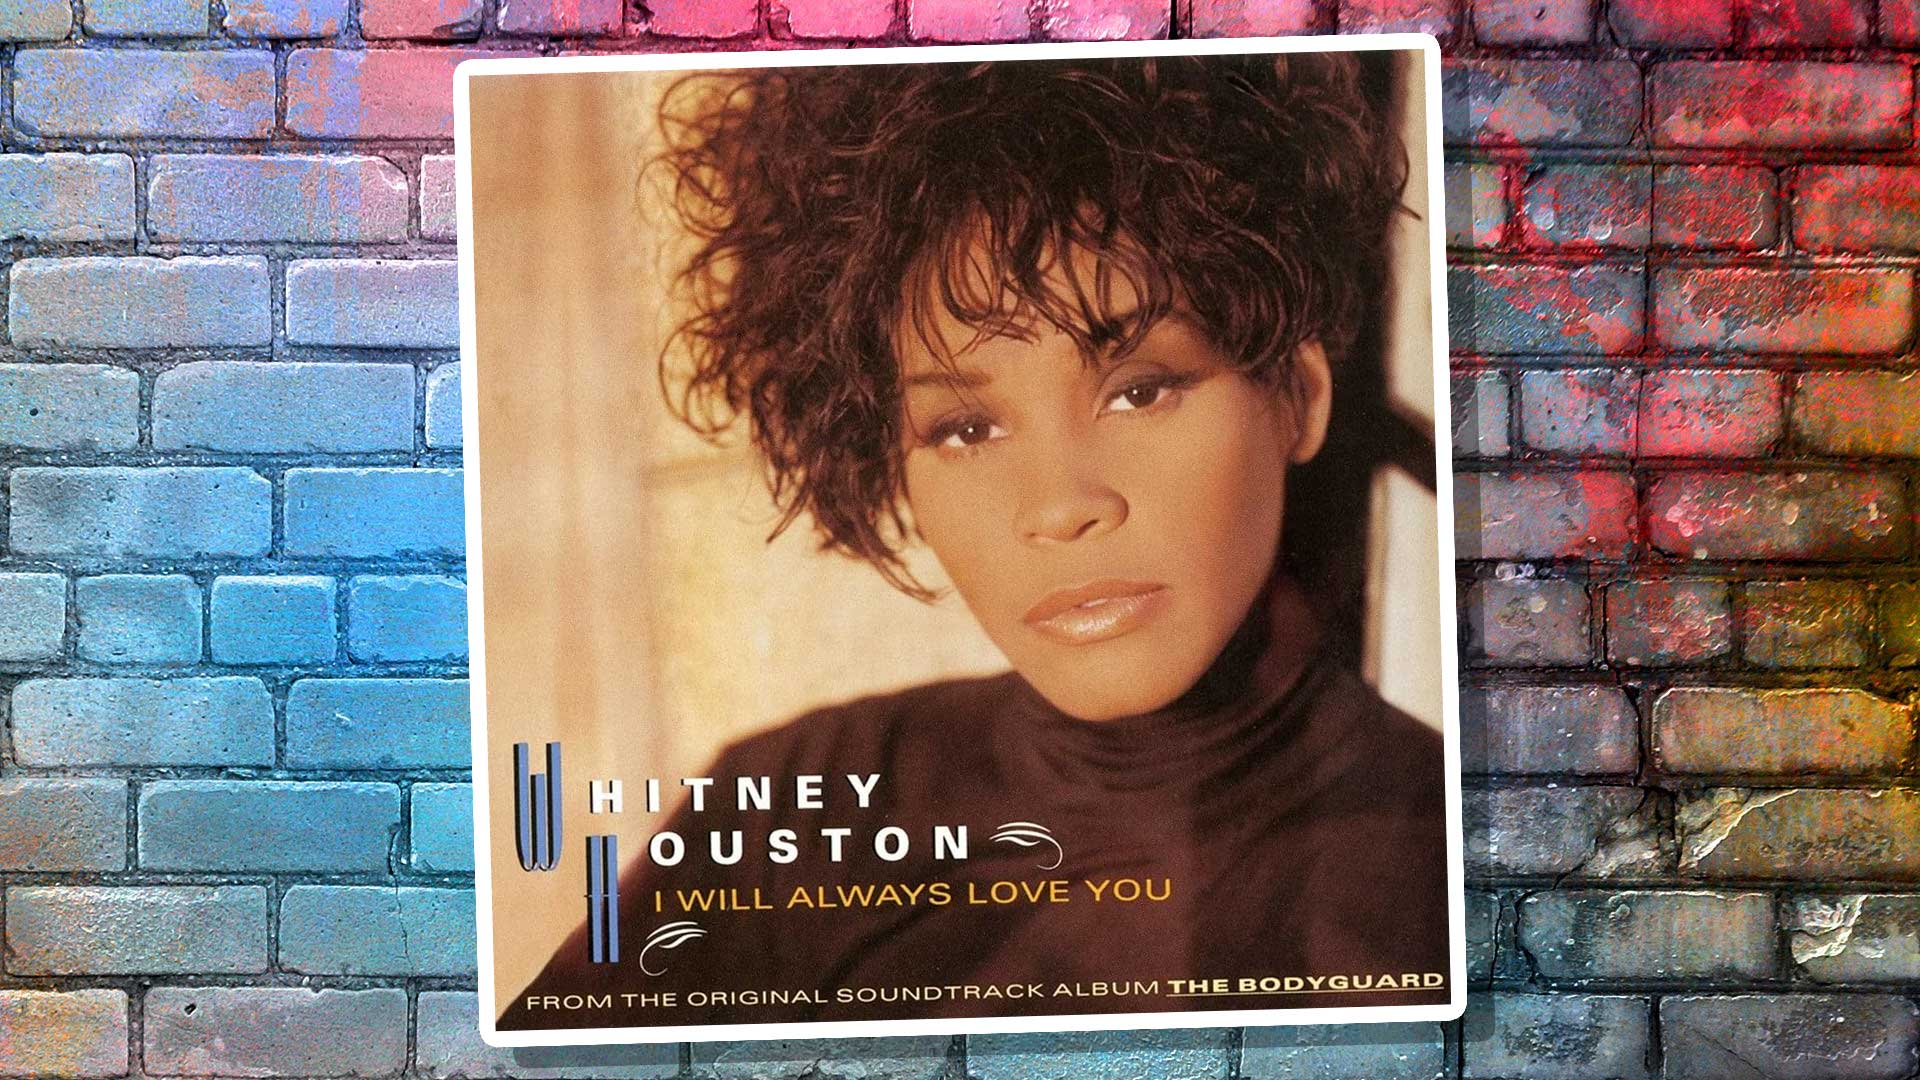 Whitney Houston's single I Will Always Love You